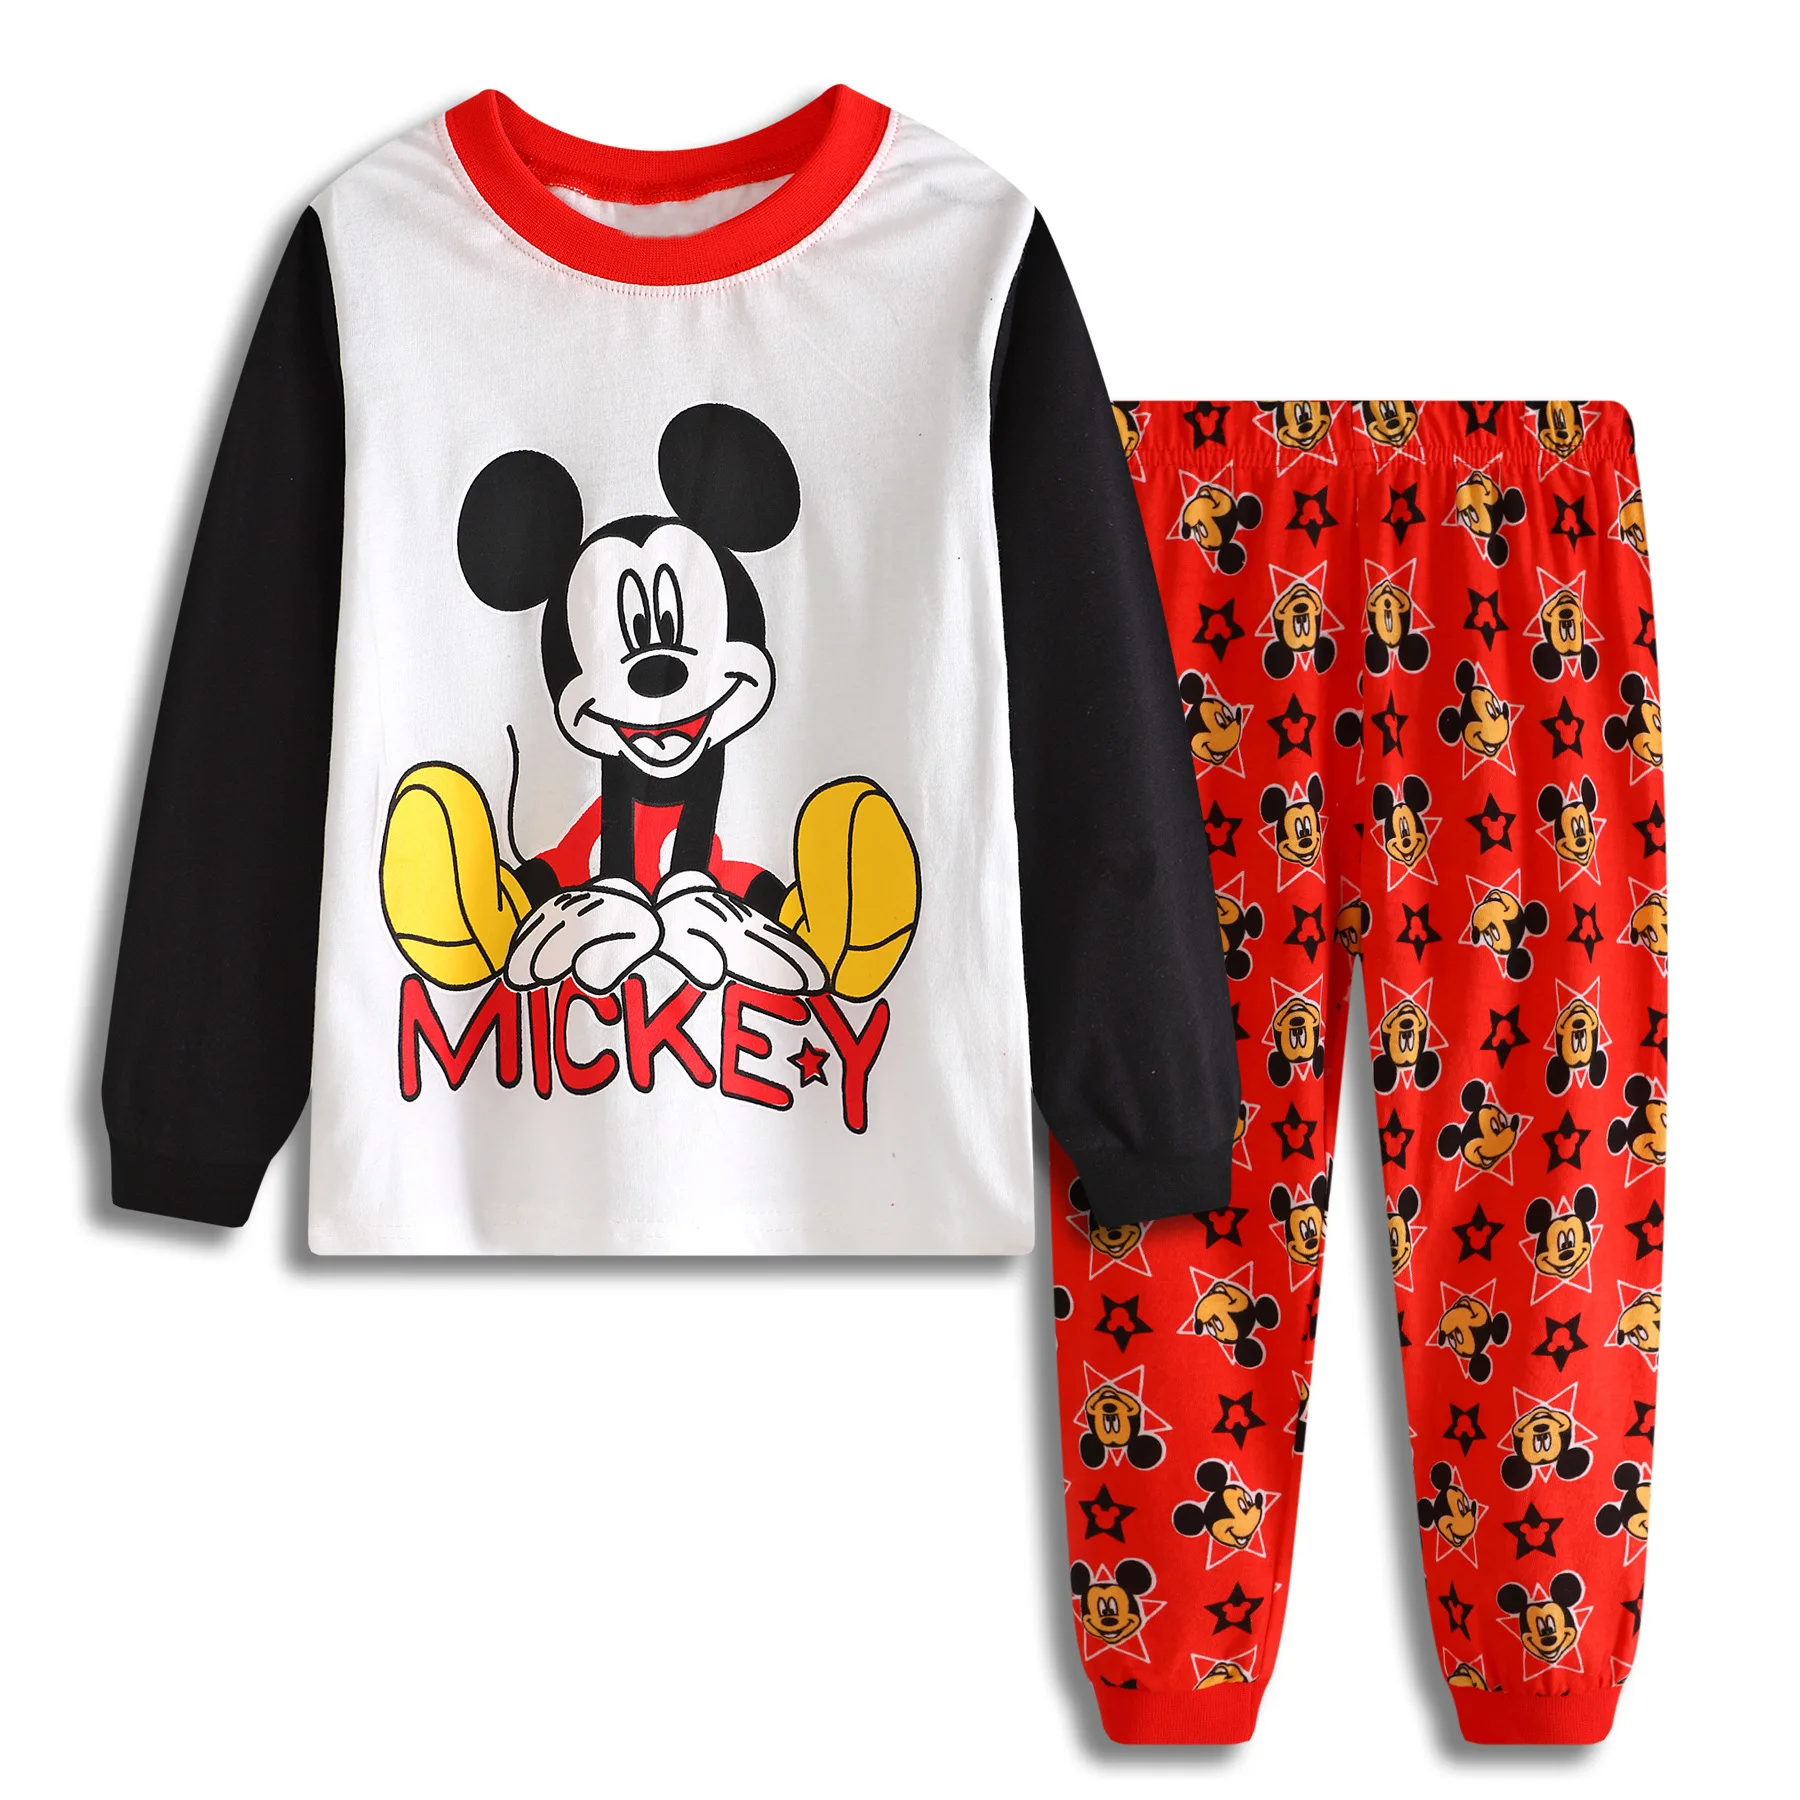 Disney Minnie Mouse Copii Set de Pijama Pijamale Copii Băieți Fete 2 buc Pijamale de Bumbac, Pijamale, Haine reducere ~ Baieti Haine \ www.antena1slobozia.ro